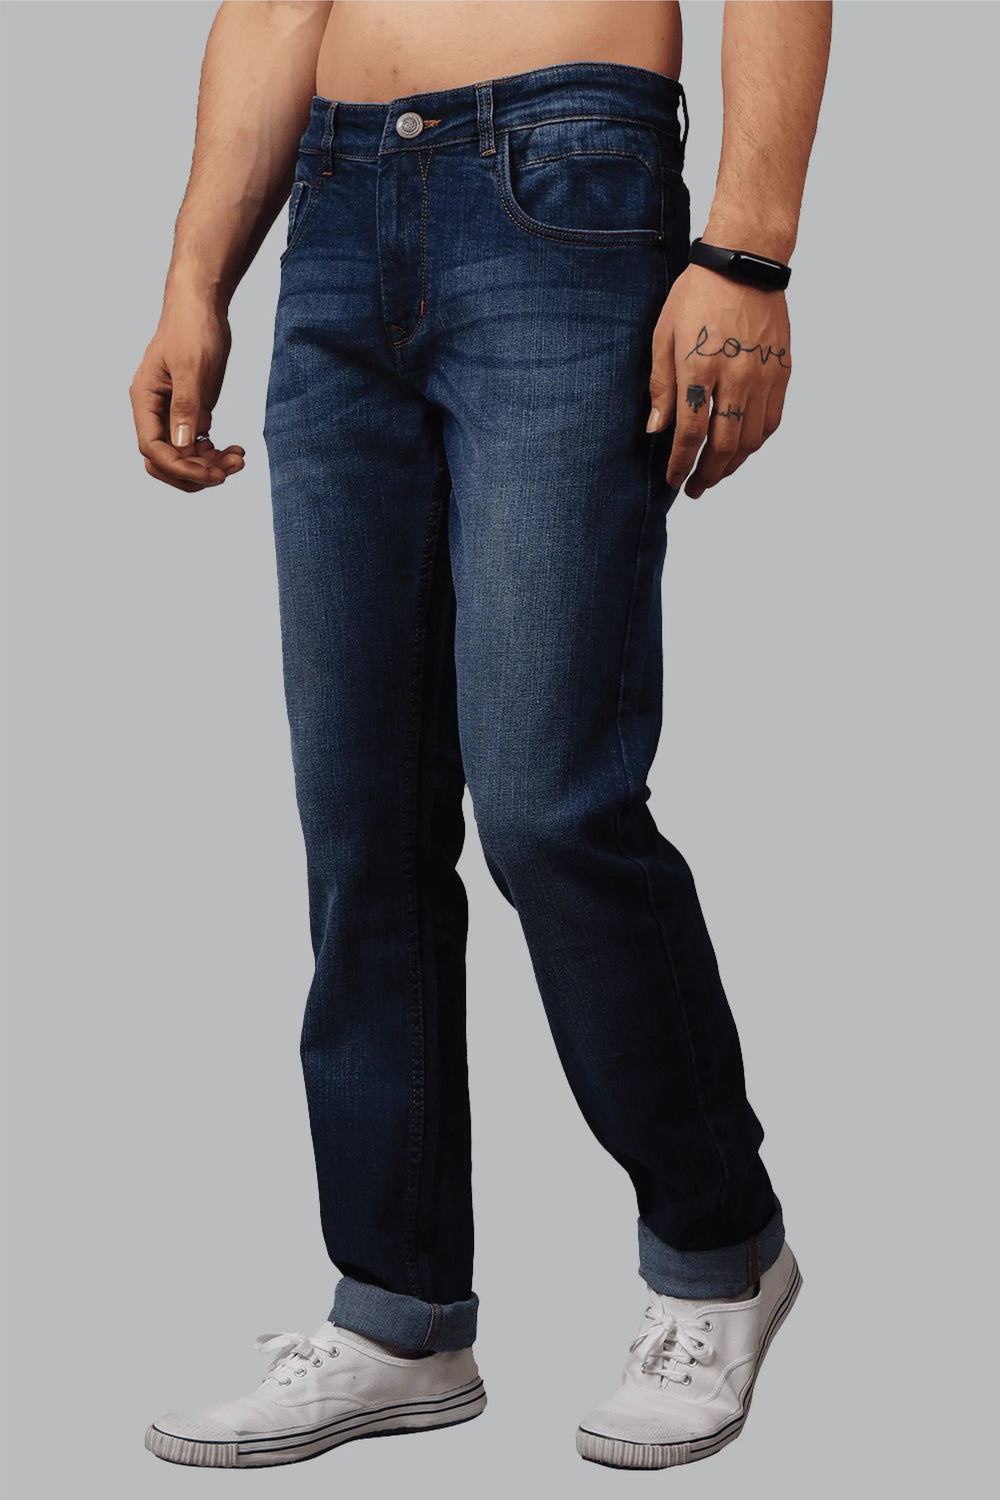 Slim Fit Blue stretchable Denim Jeans For Men - Peplos Jeans 